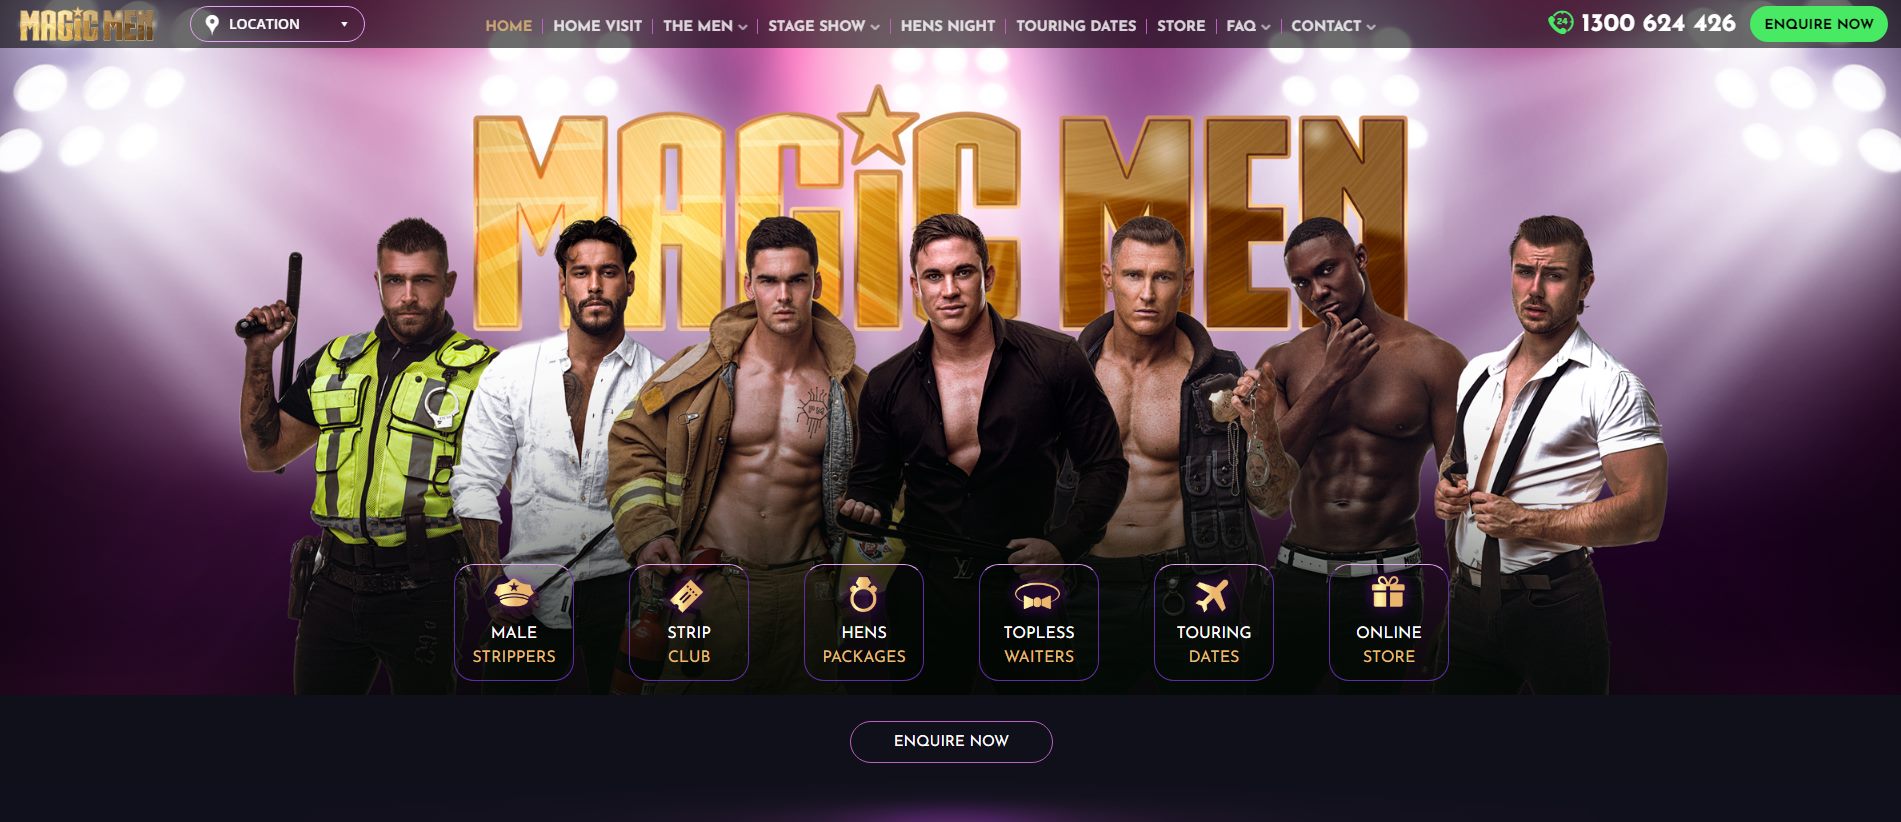 magic men australia male strippers melbourne